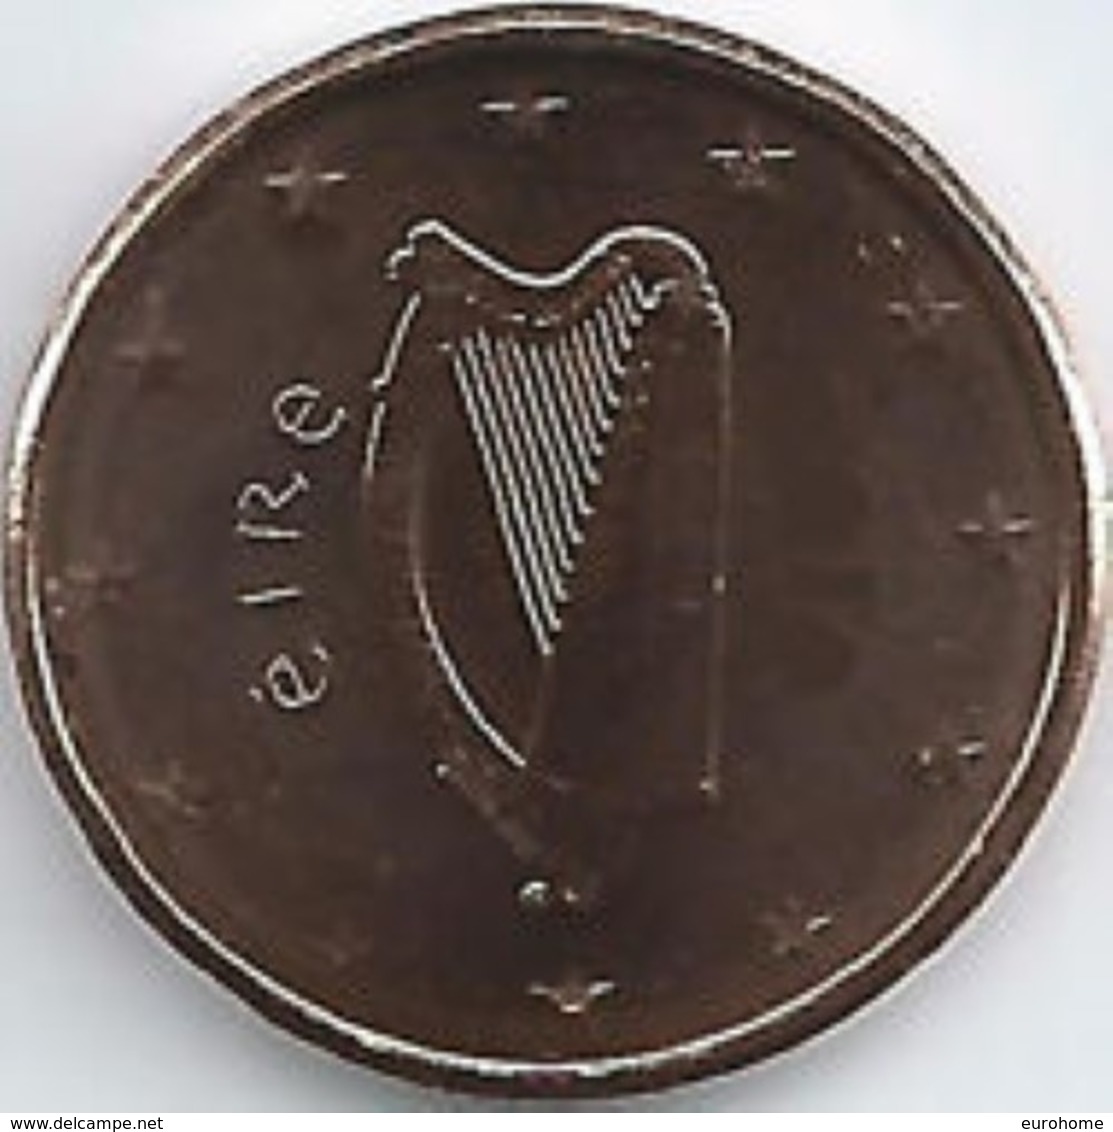 Ierland 2019  2 Cent  UNC Uit De BU  UNC Du Coffret  ZEER ZELDZAAM - EXTREME RARE  8.000 Ex !!! - Irlande